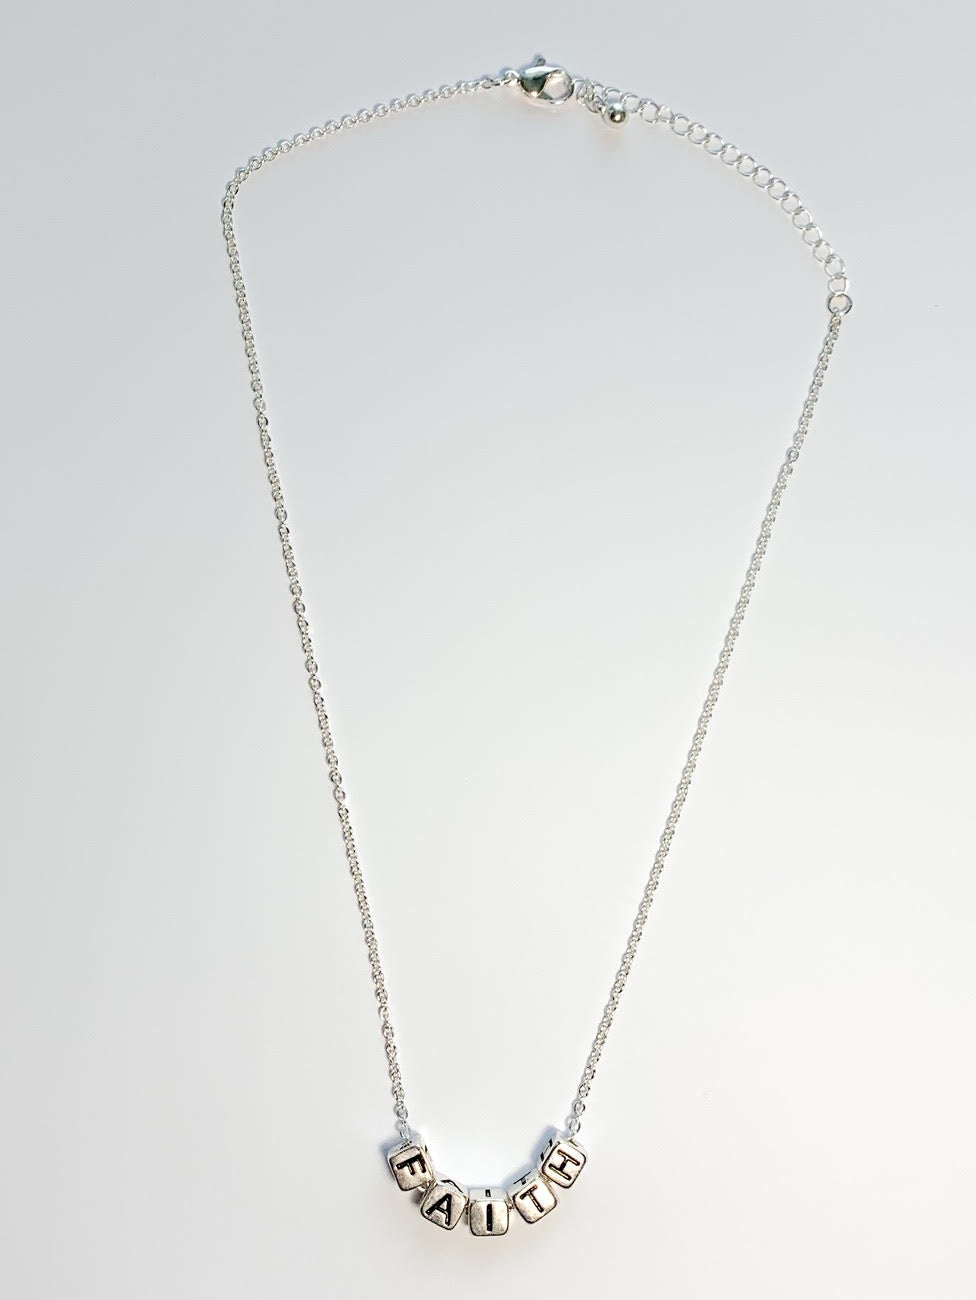 Fused Glass Sailboat Pendant Necklace, Fun Summer Look Silver Tone Block  Chain | Sailboat pendant, Pendant necklace, Pendant